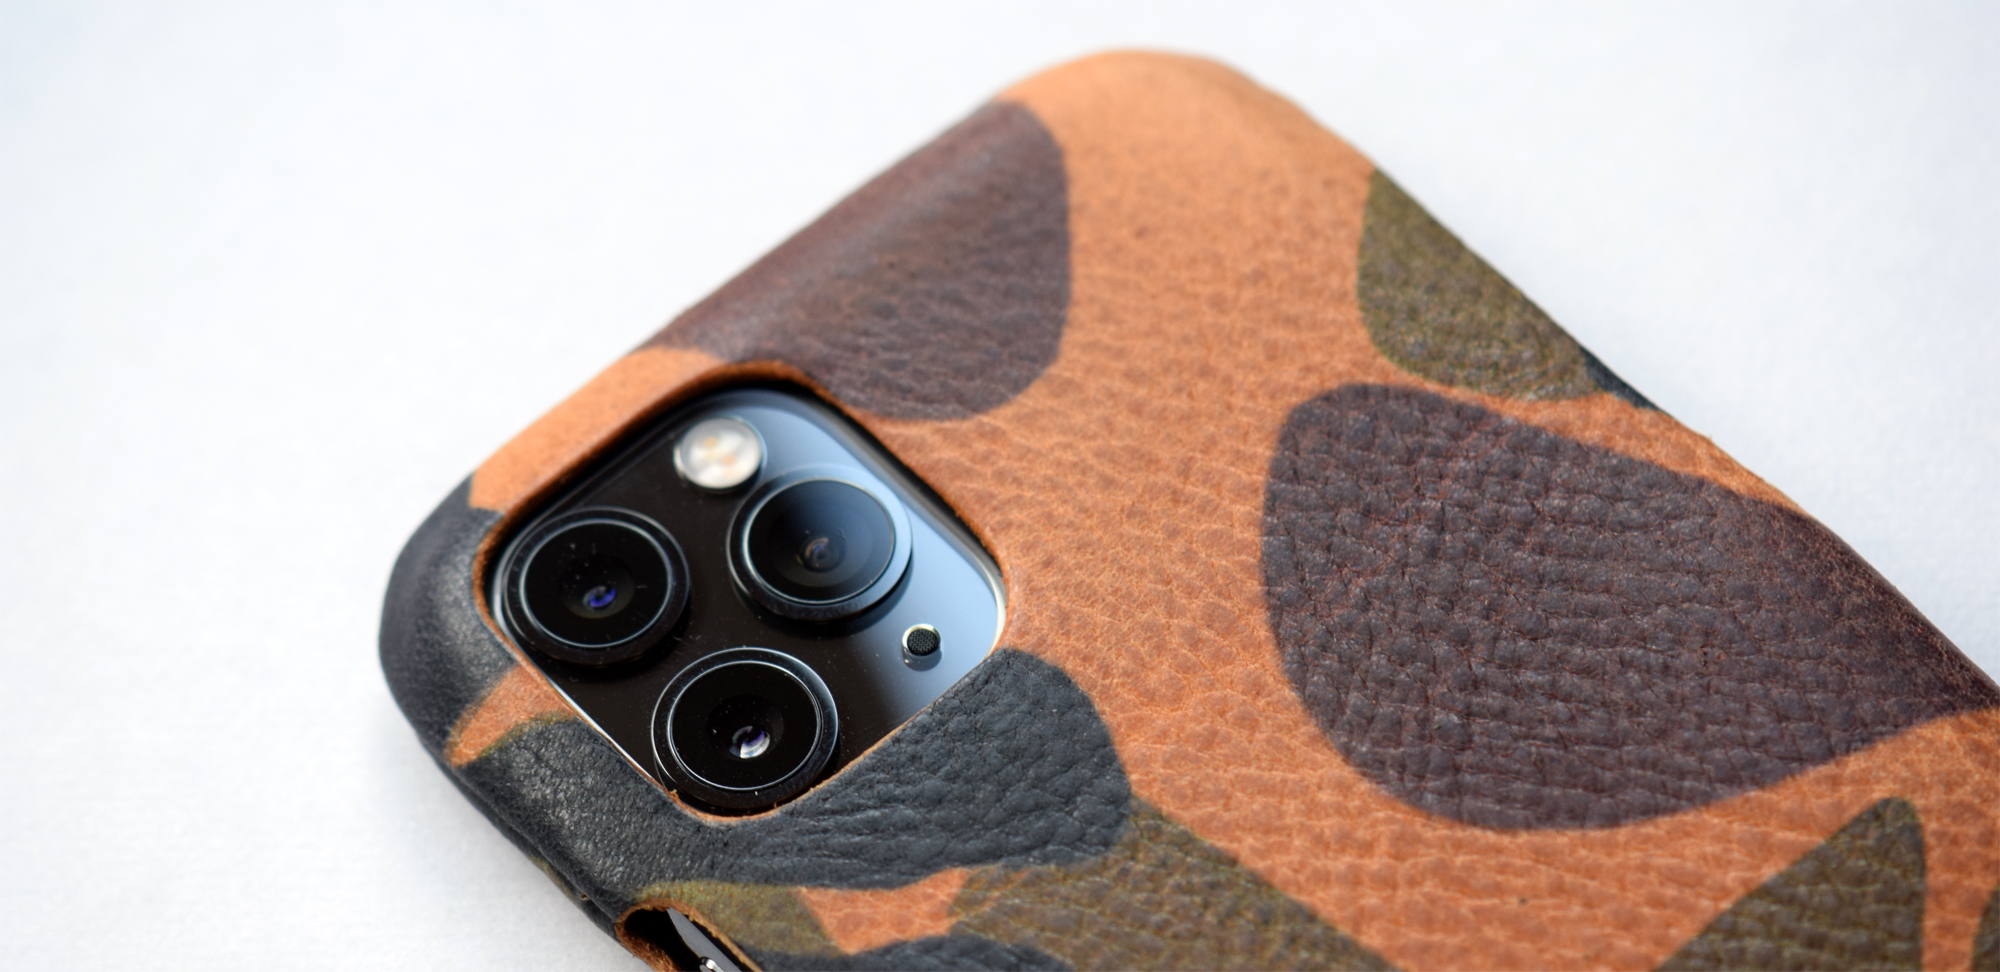 Roberu iPhone 11 Pro Camouflage Case